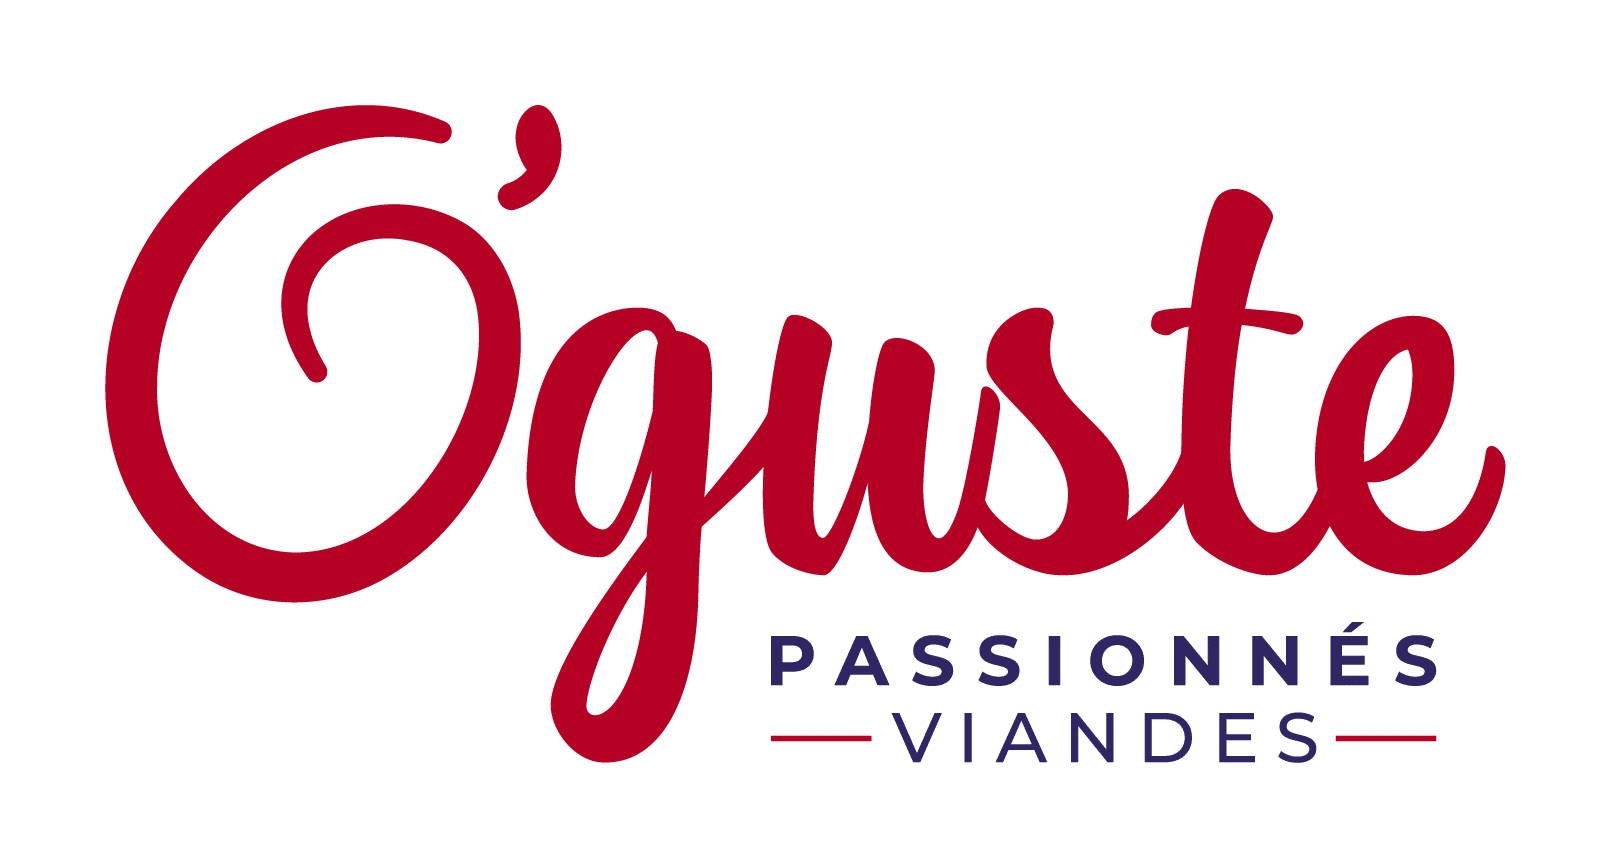 Logo O"Guste Passionnés Viandes